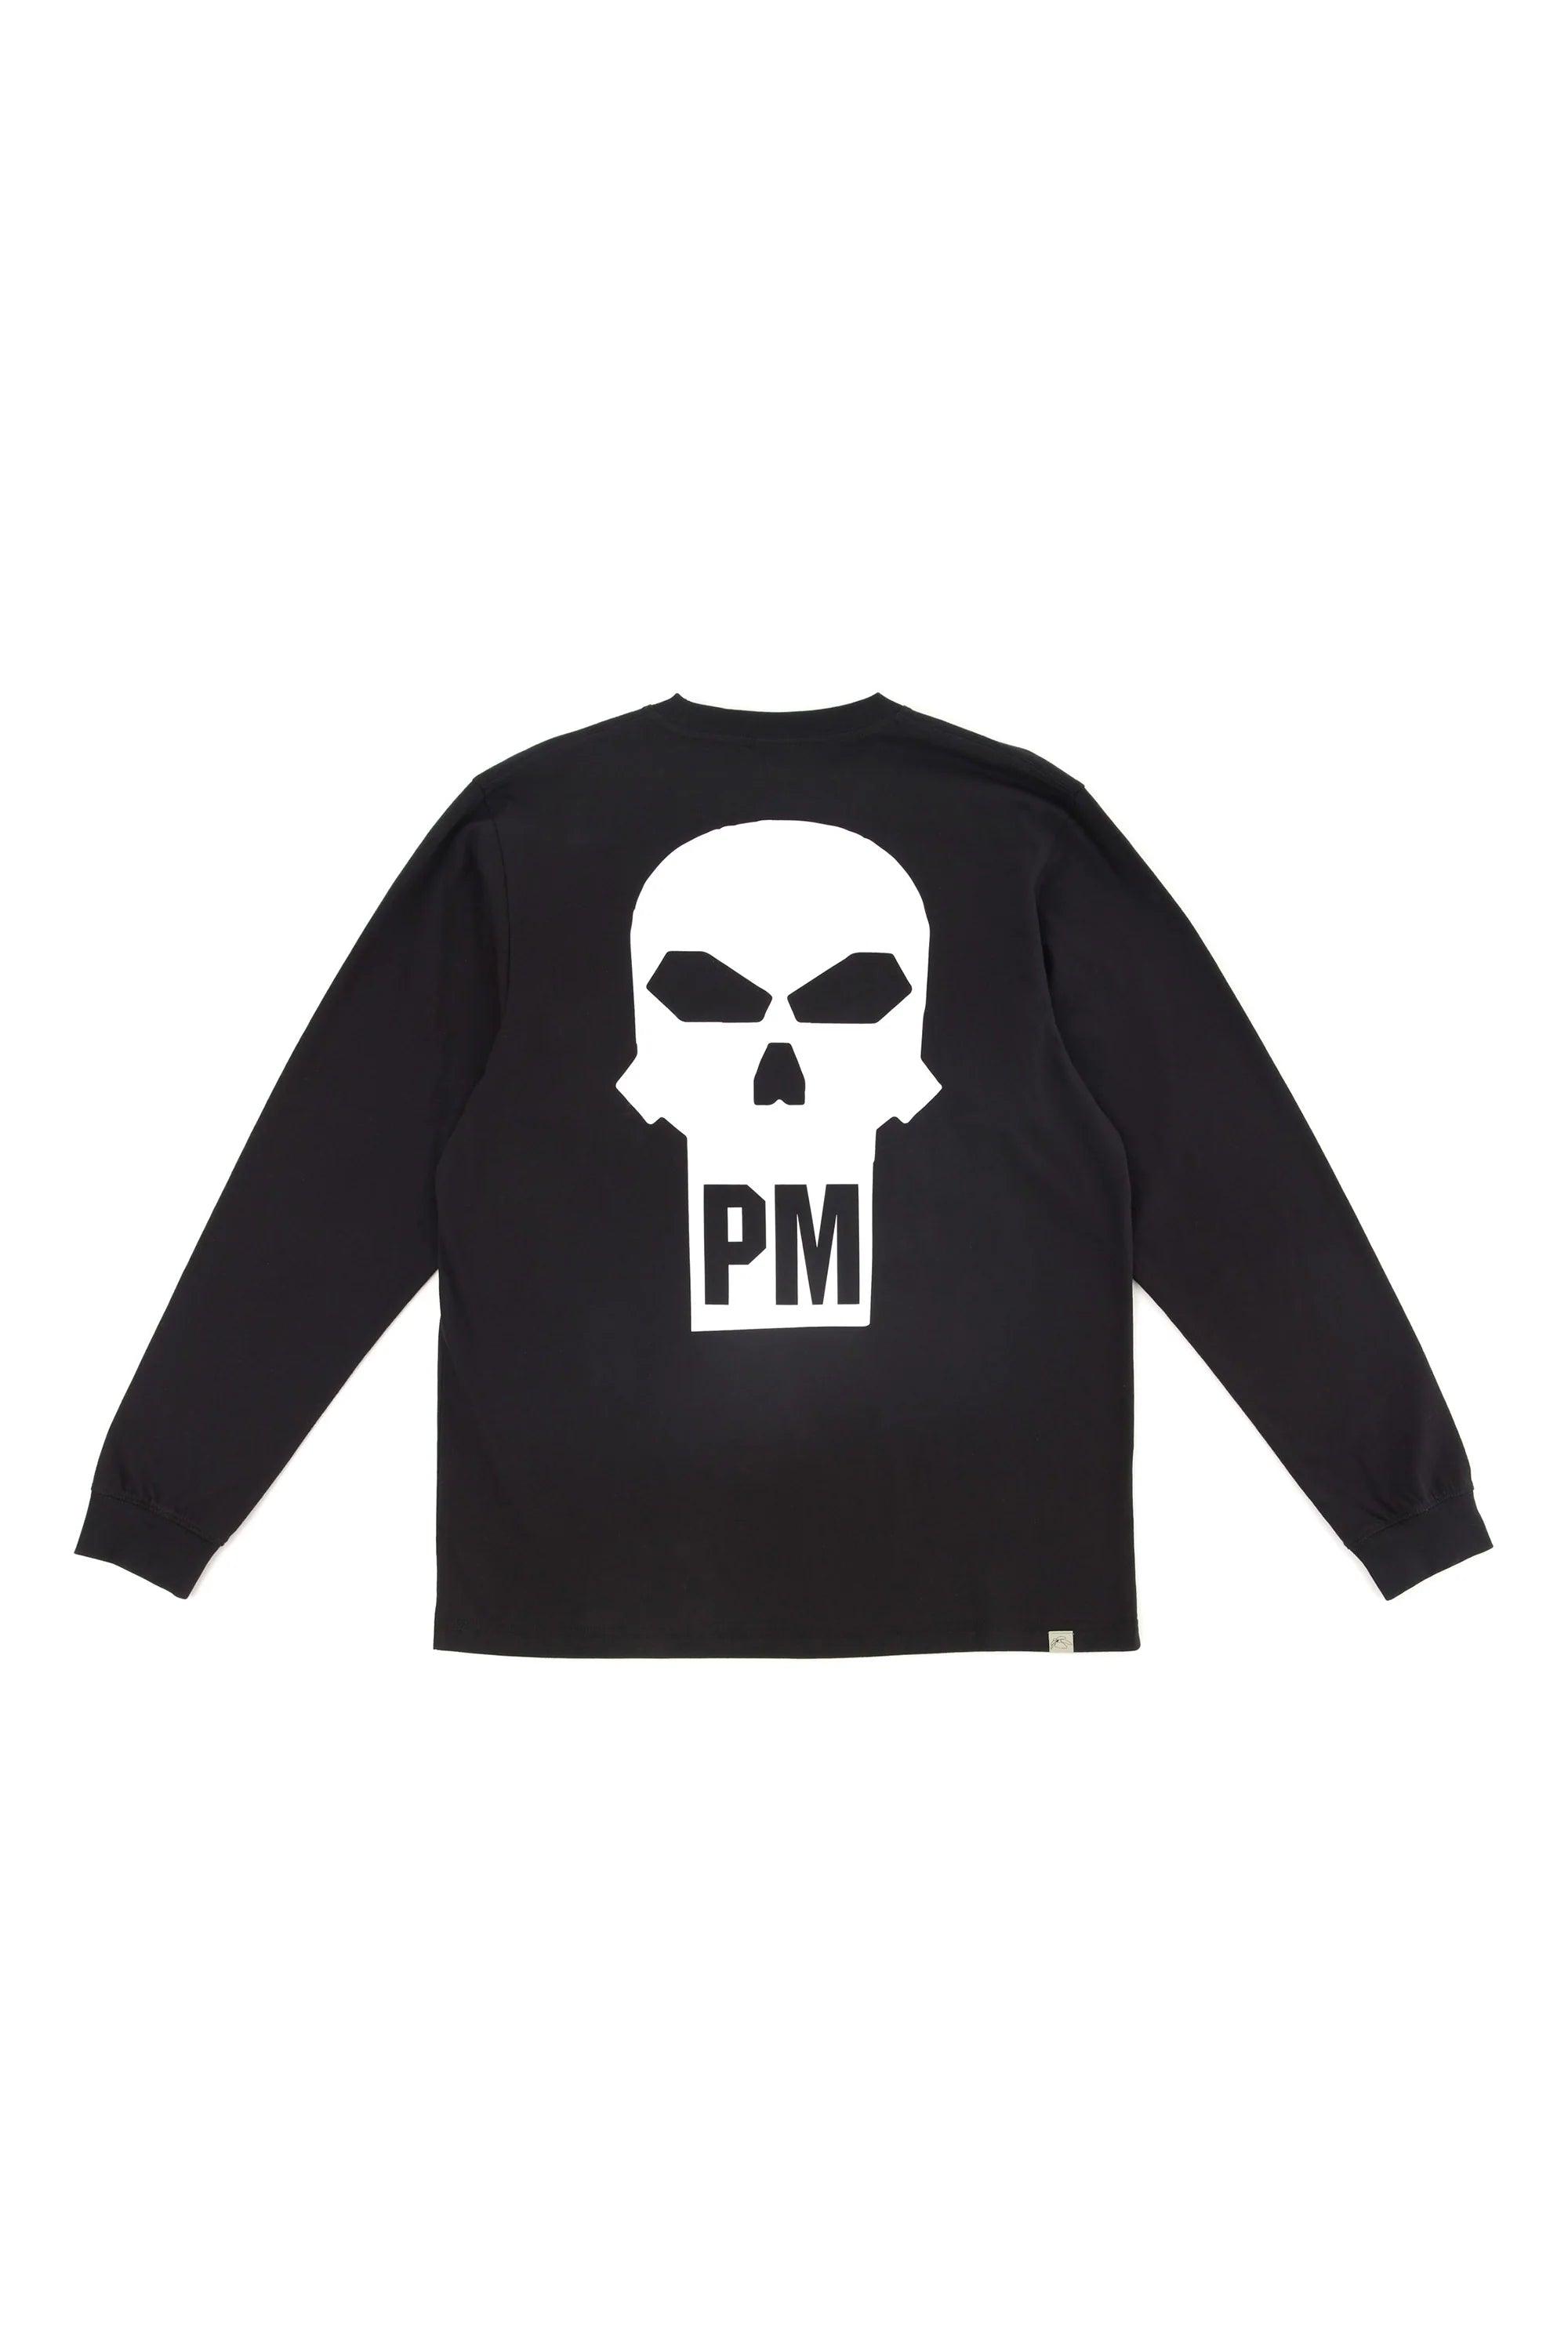 PAM / Perks and Mini - Kompost LS Tee - Black - T-Shirts